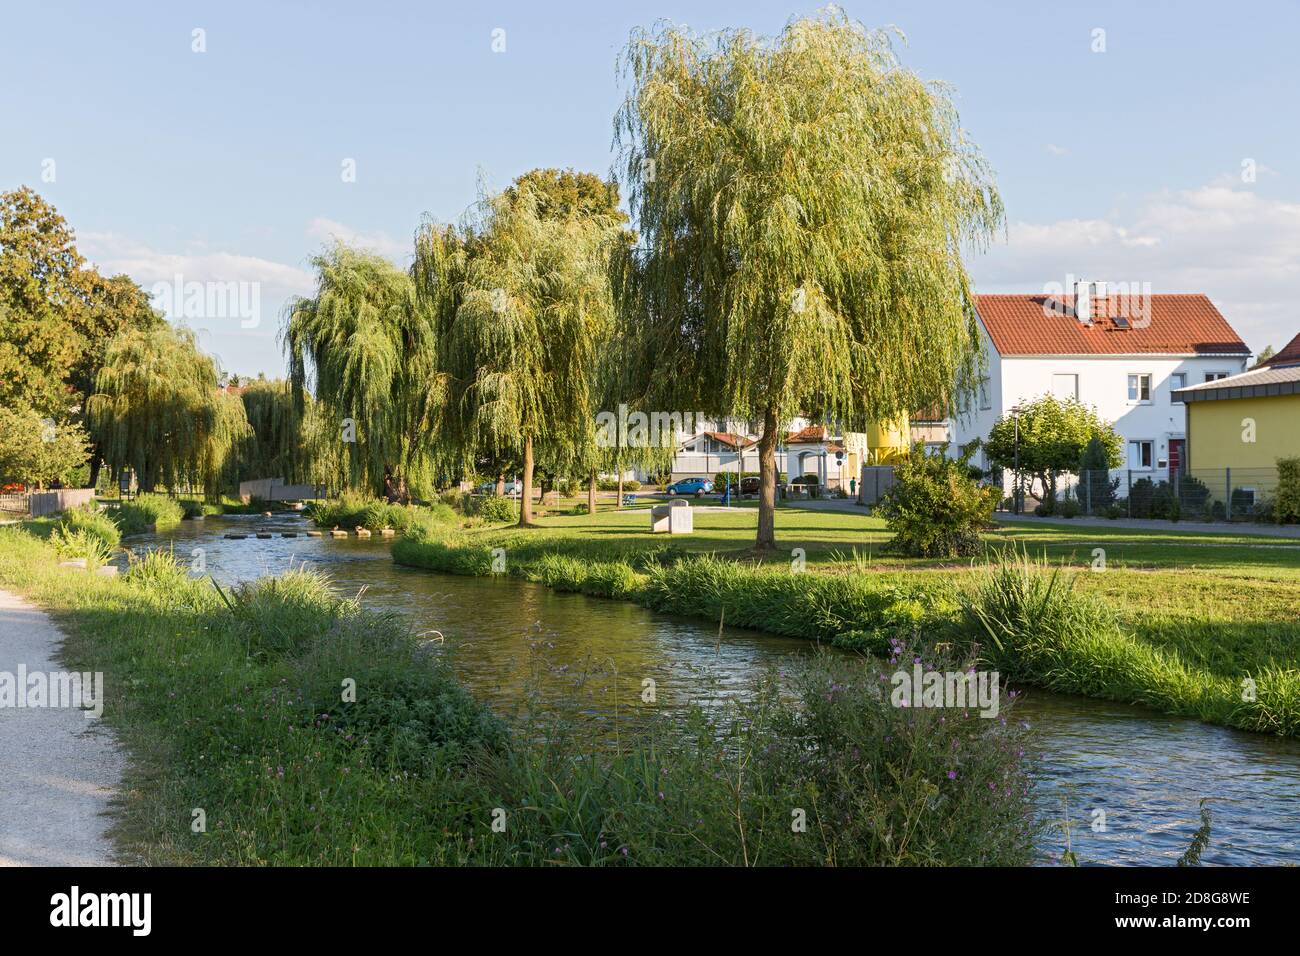 Beilngries, Sulzpark, Fluss, Bäume, Wohnhäuser Stock Photo